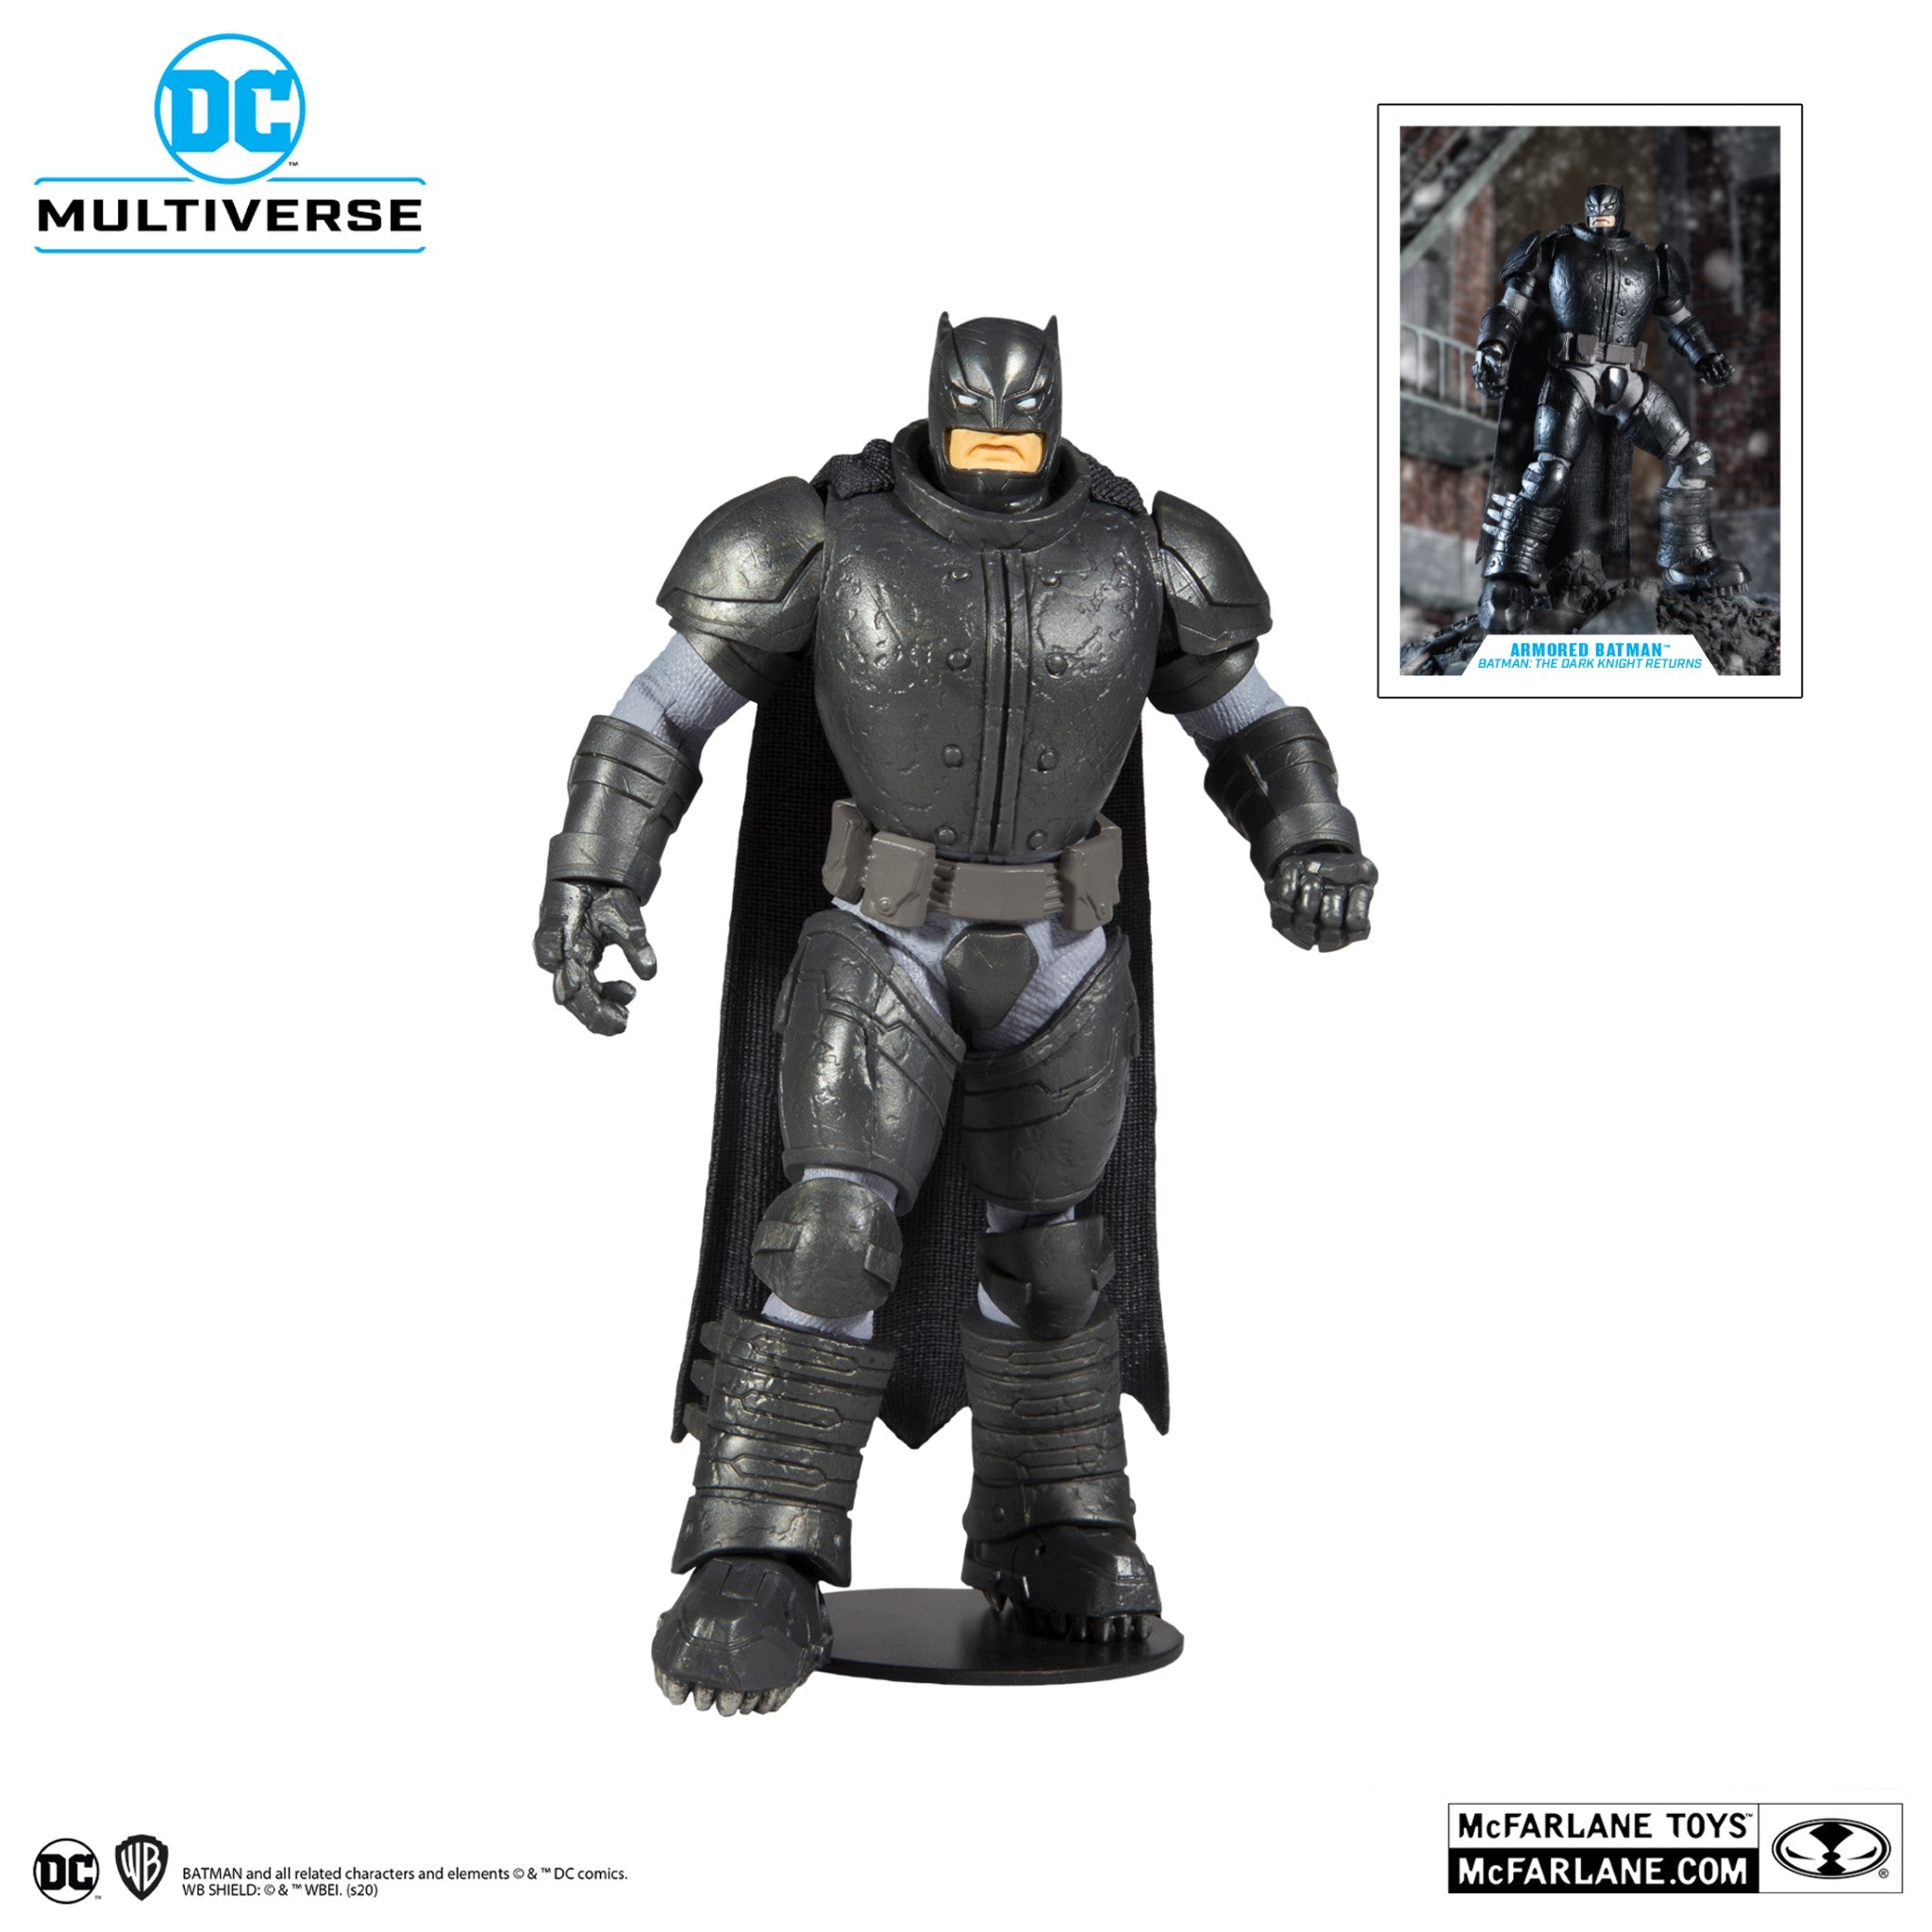 DC Multiverse The Dark Knight Returns Armored Batman - McFarlane Toys-3